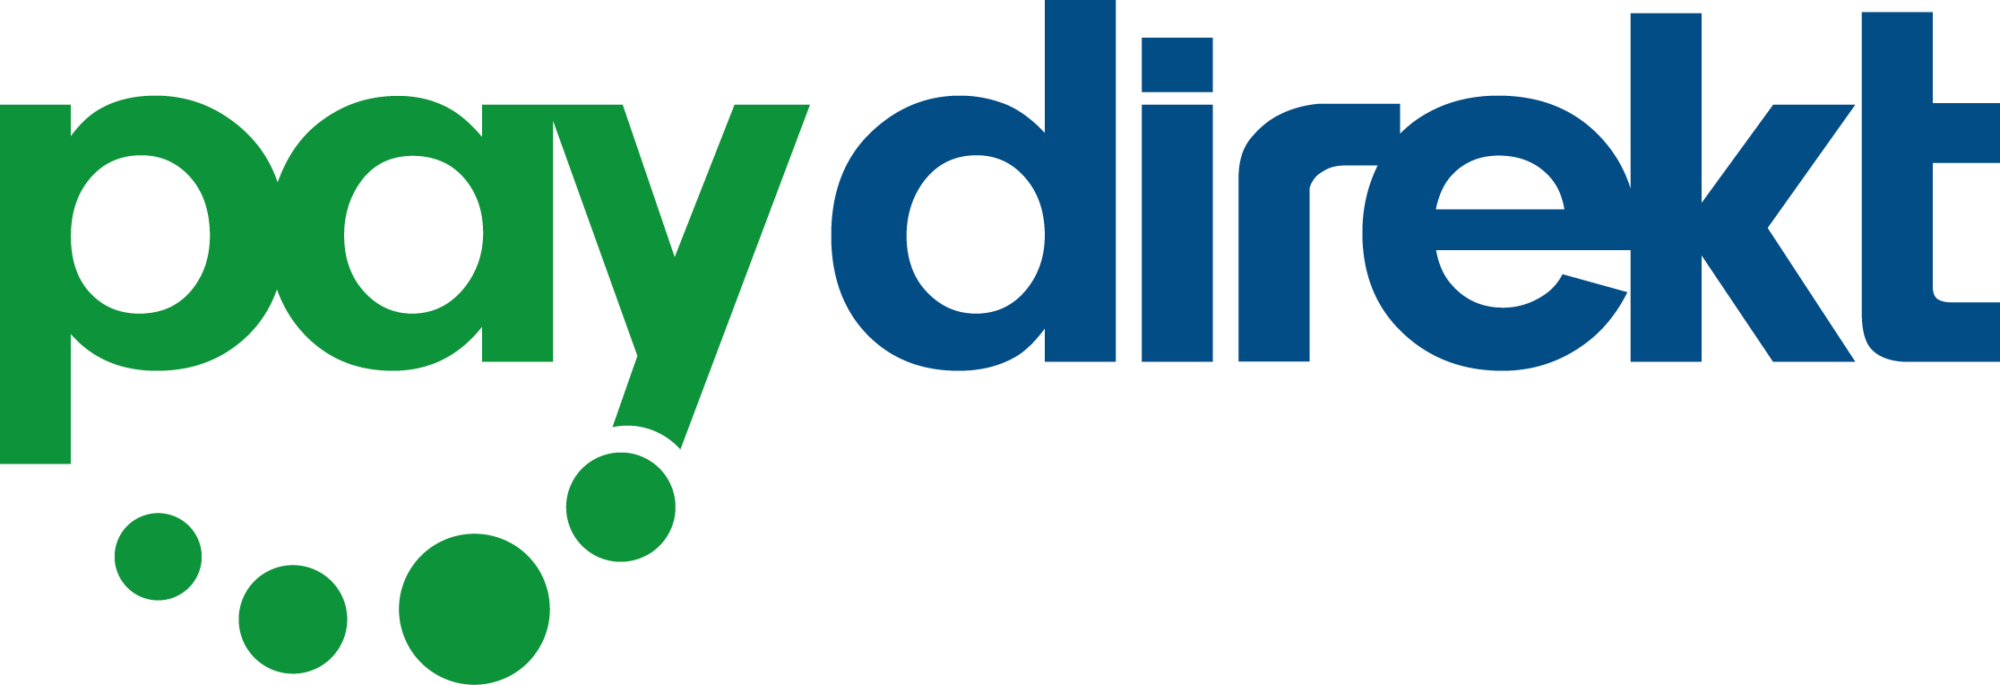 paydirekt_logo_4C